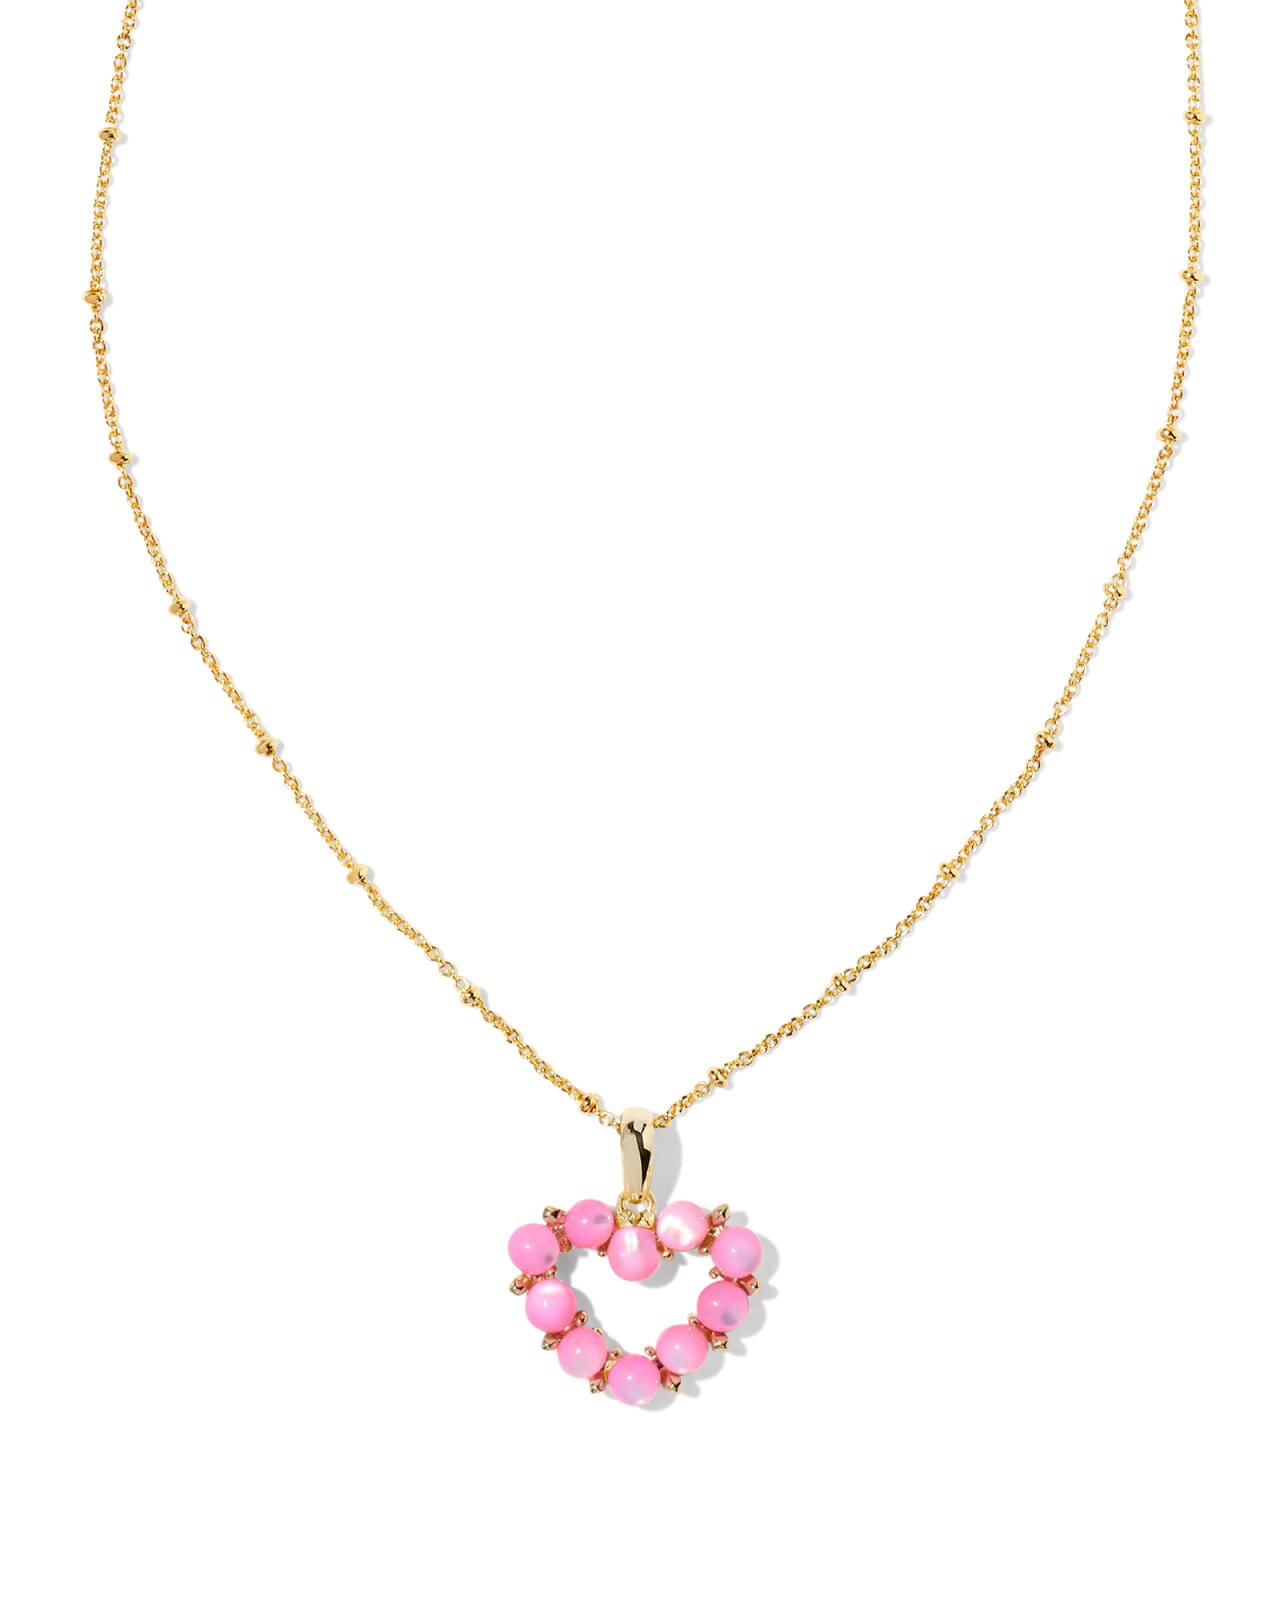 Ashton Gold Heart Short Pendant Necklace in Blush Ivory Mother-of-Pearl | Kendra Scott